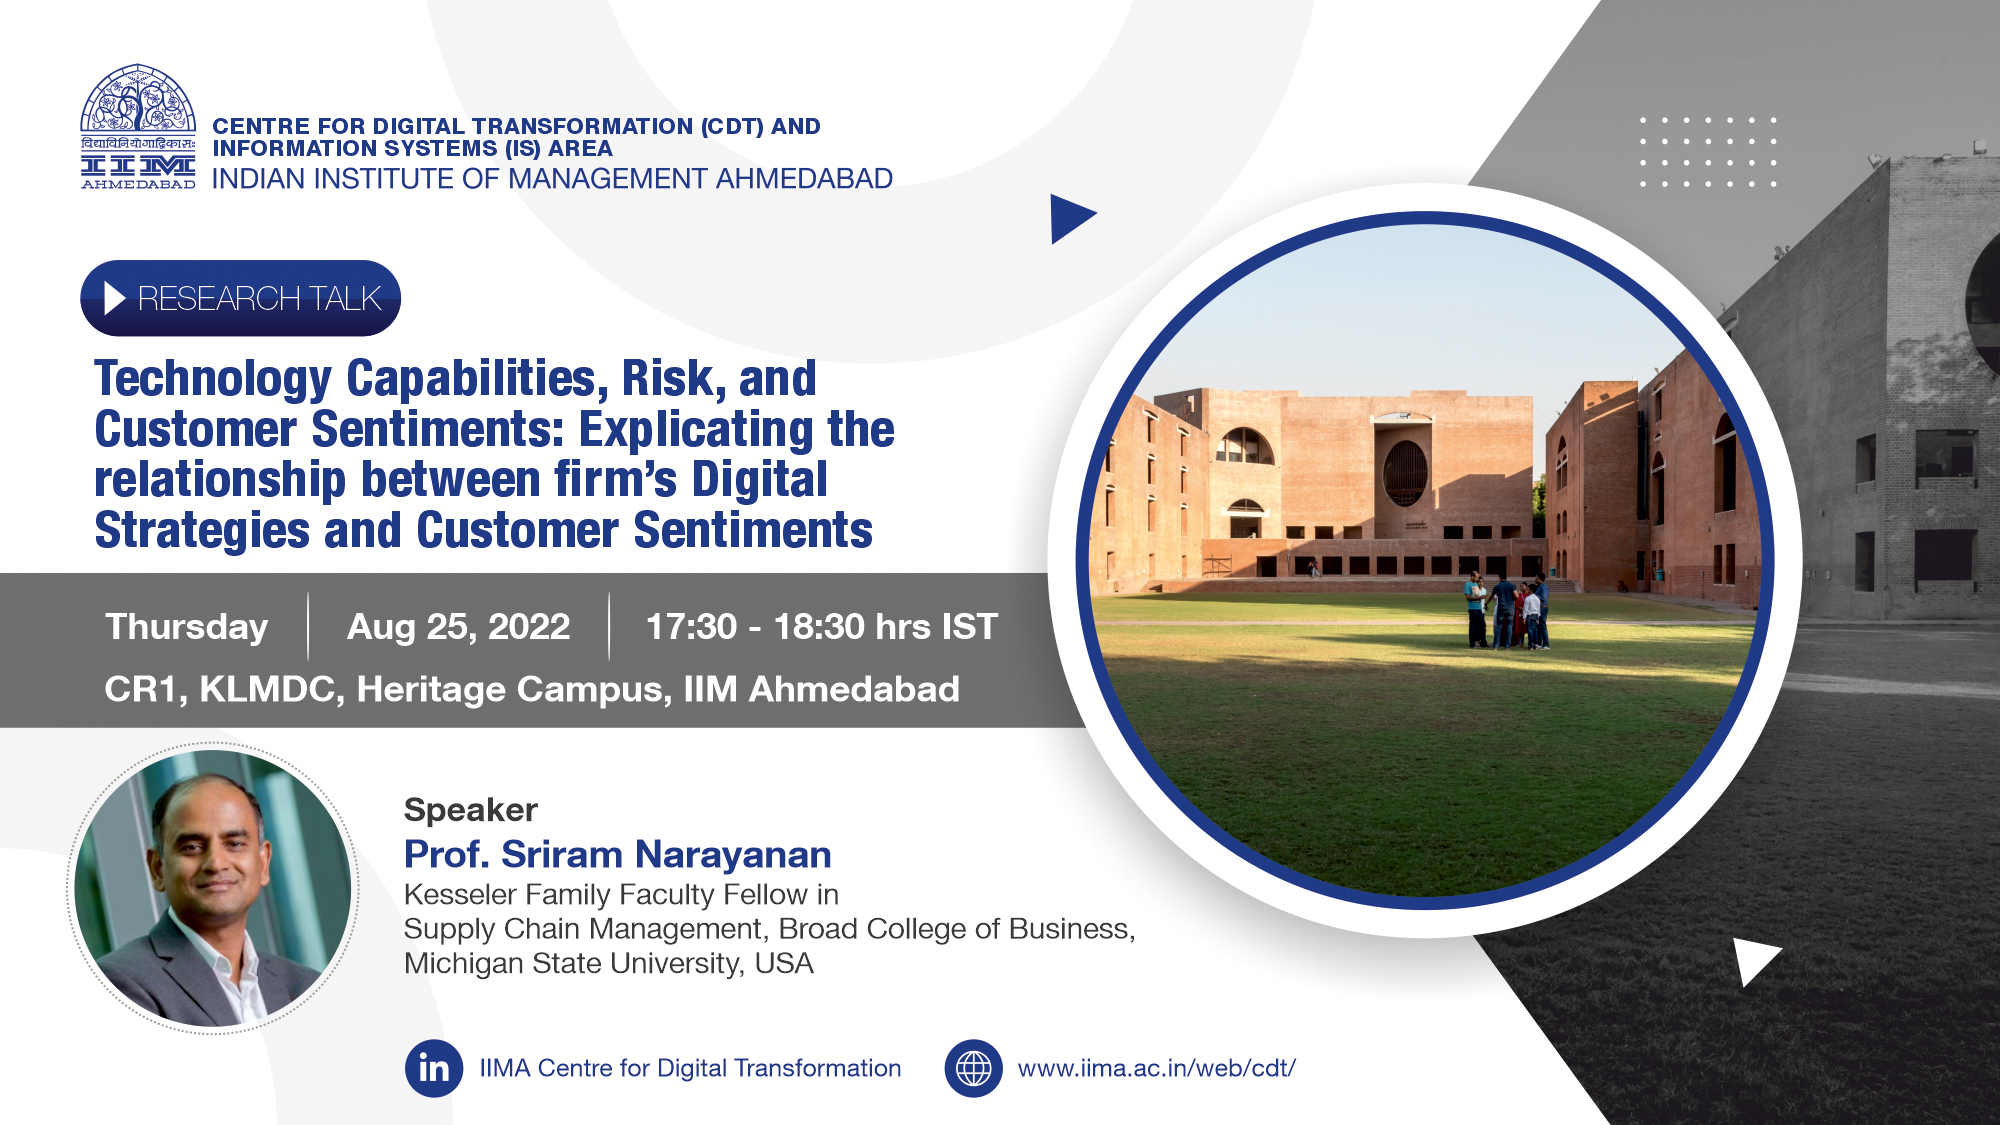 Research Talk by Prof. Sriram Narayanan on 25-Aug-22